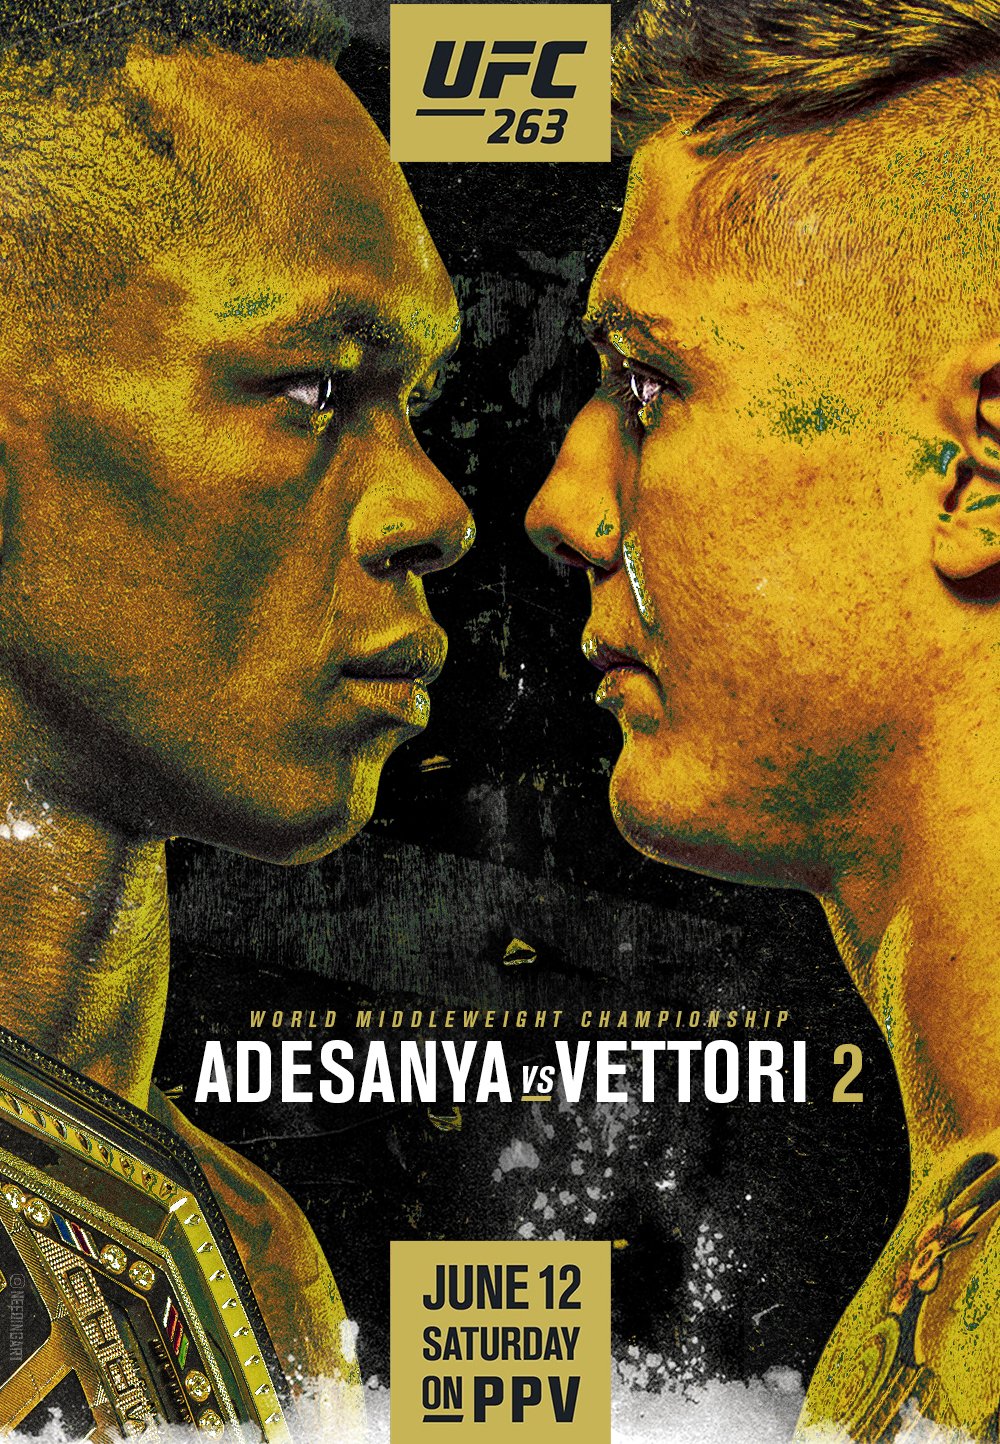 UFC 263 - Glendale - Poster et affiche